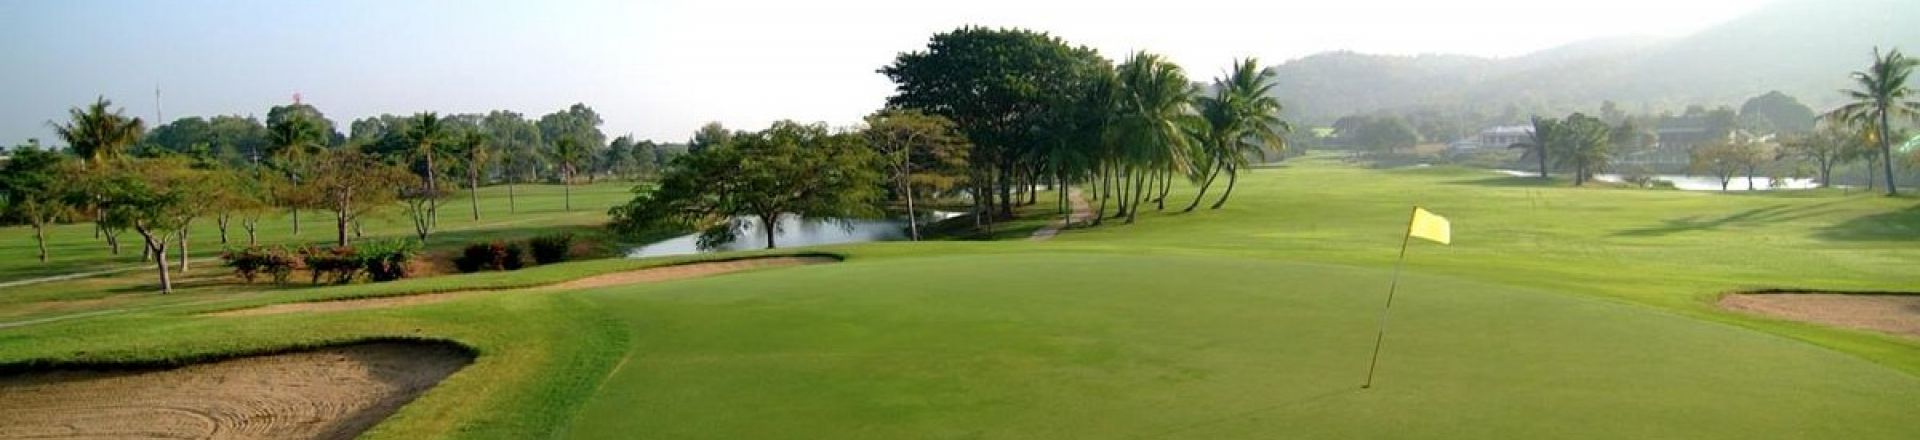 Play golf in Thailand at Palm Hills Golf Club